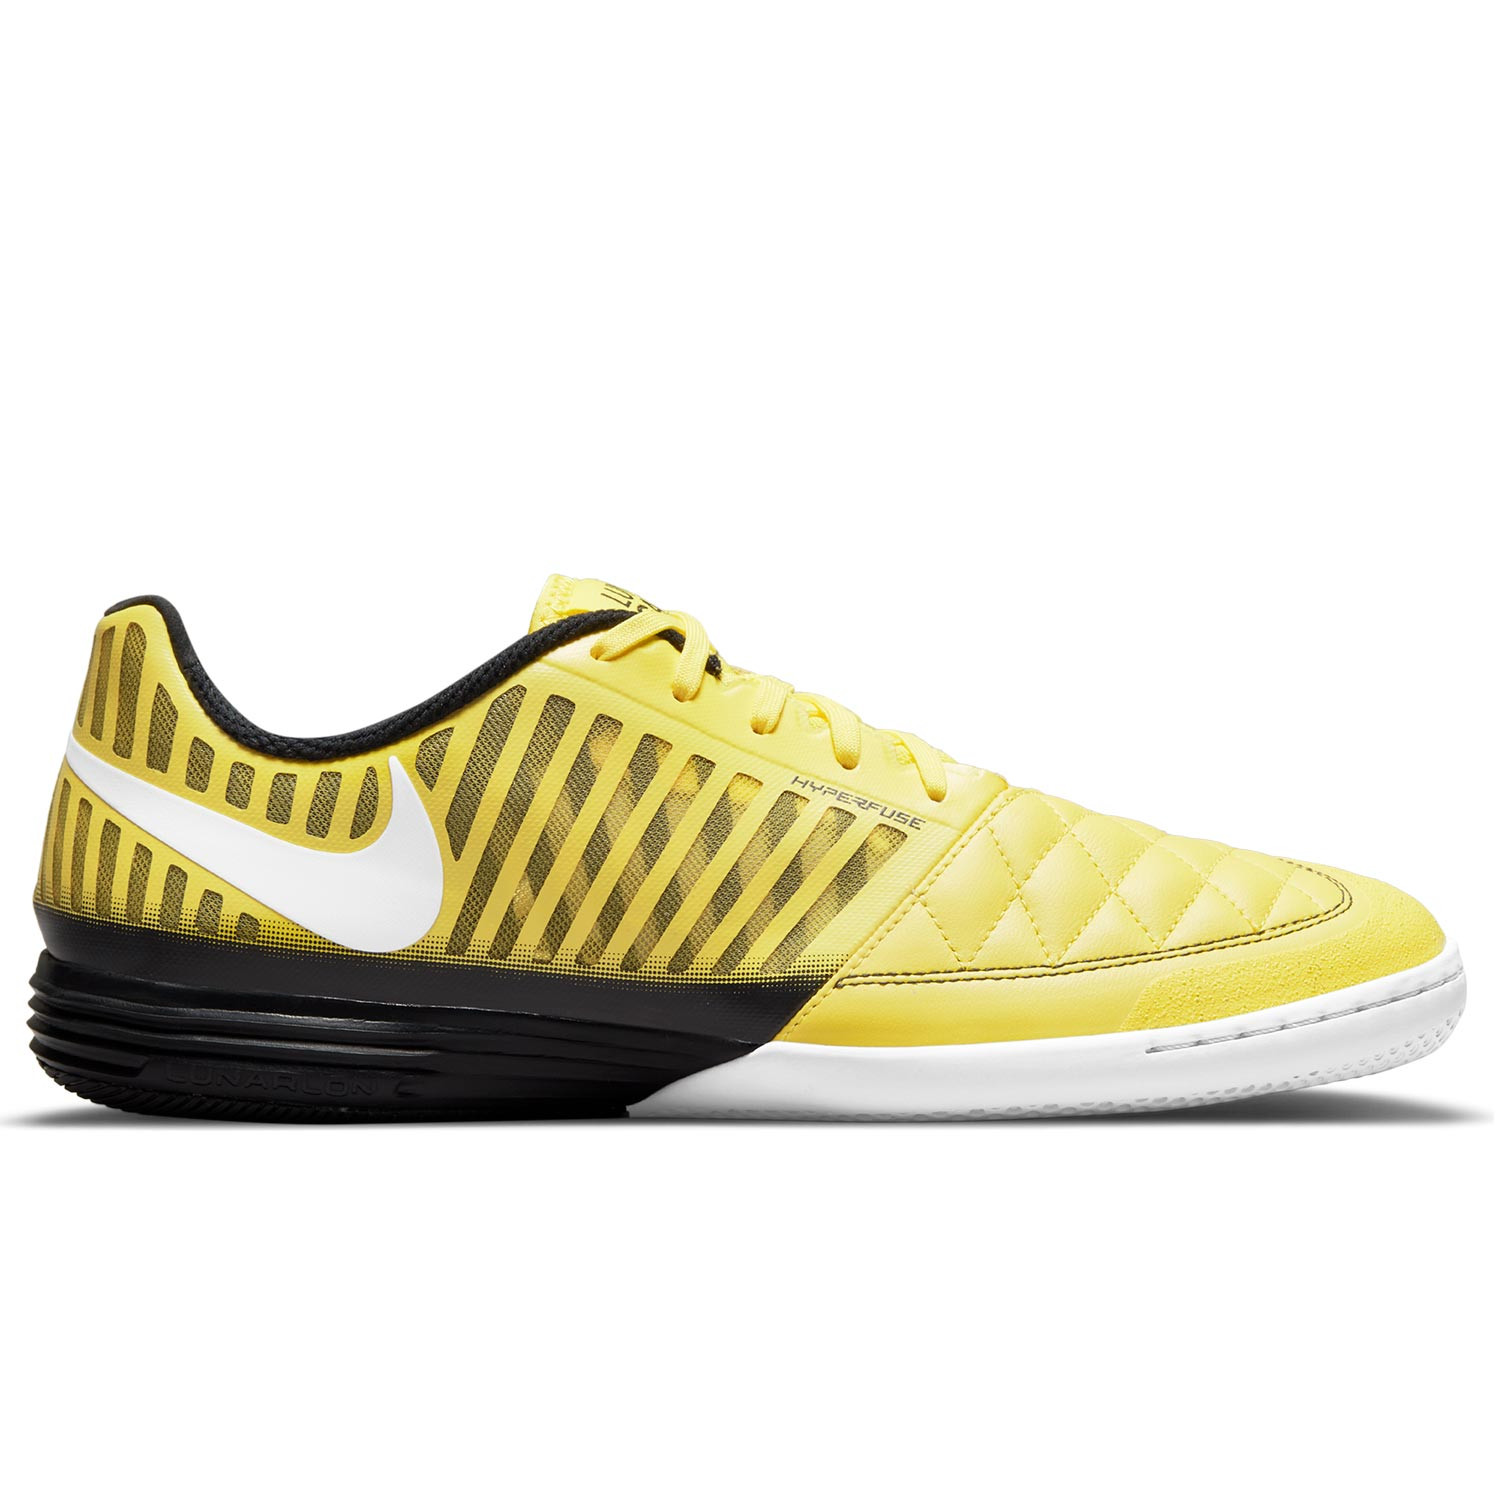 Zapatillas futsal Nike Gato 2 amarillas